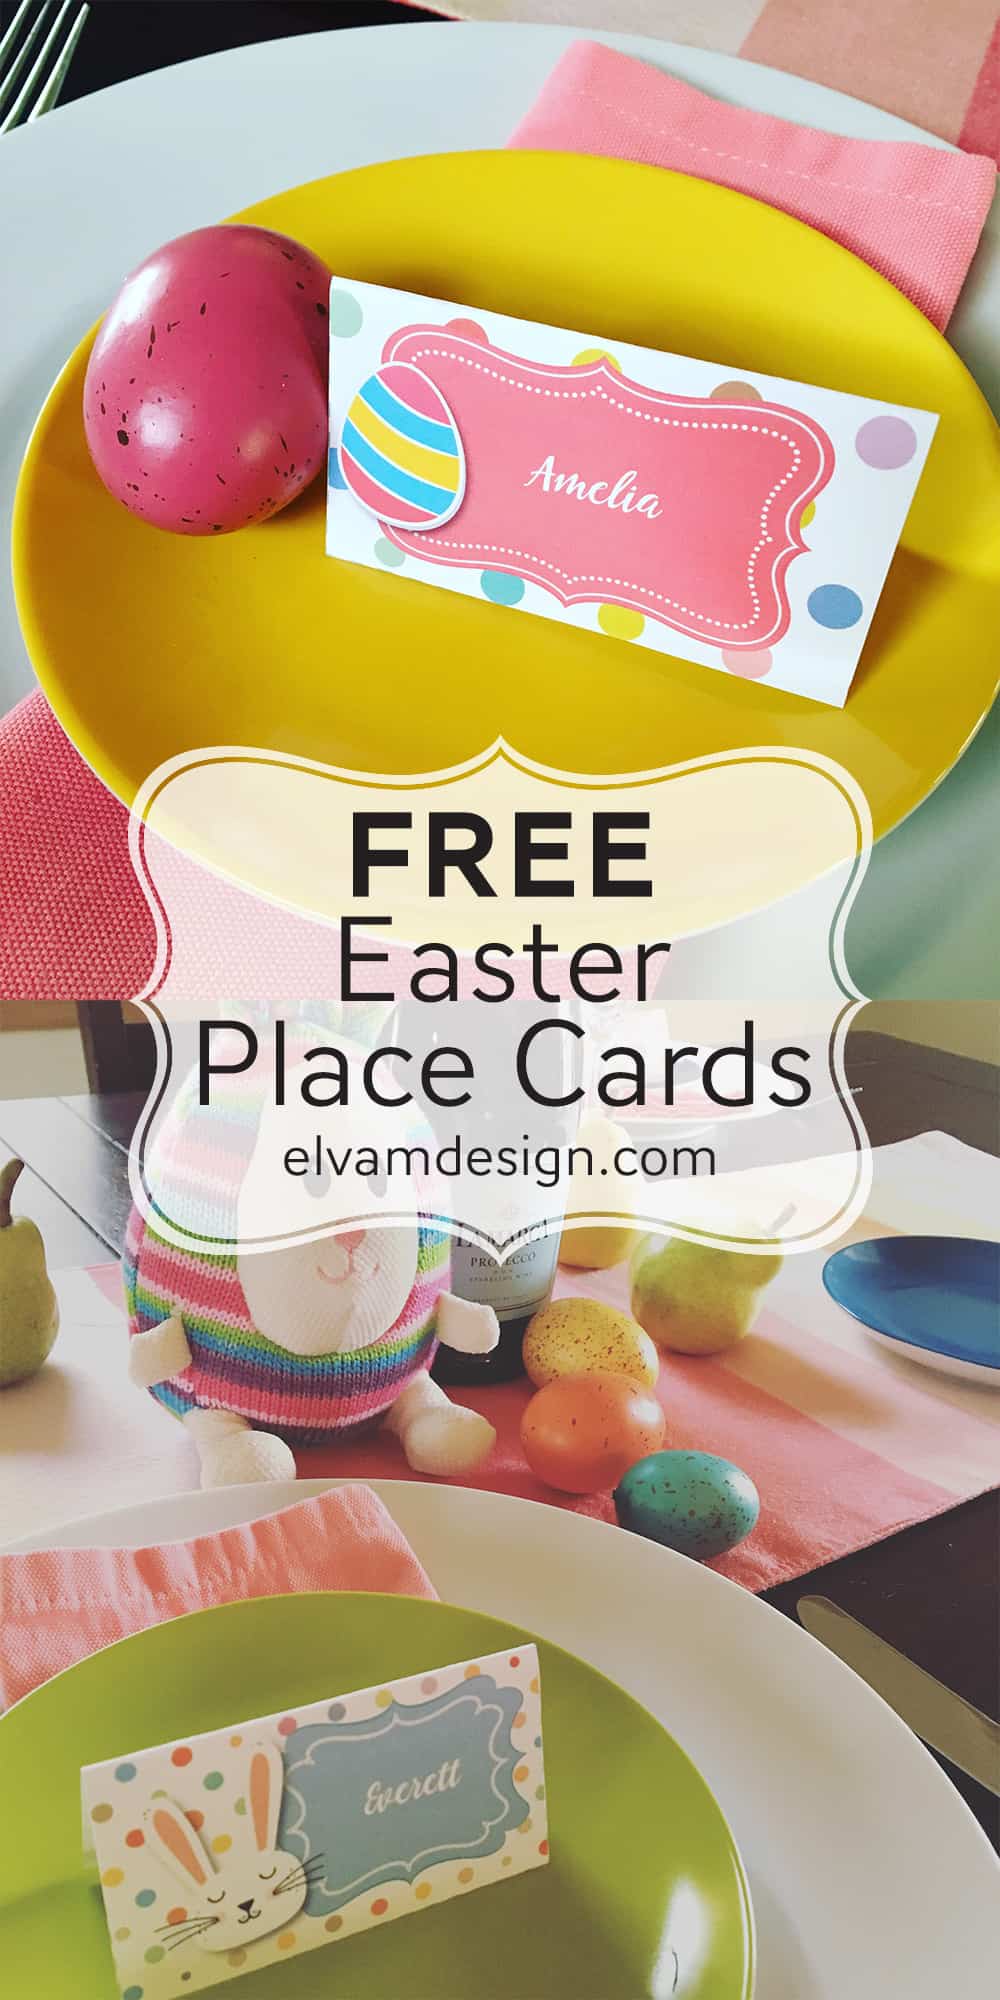 Free Easter Place Cards from Elvamdesign.com